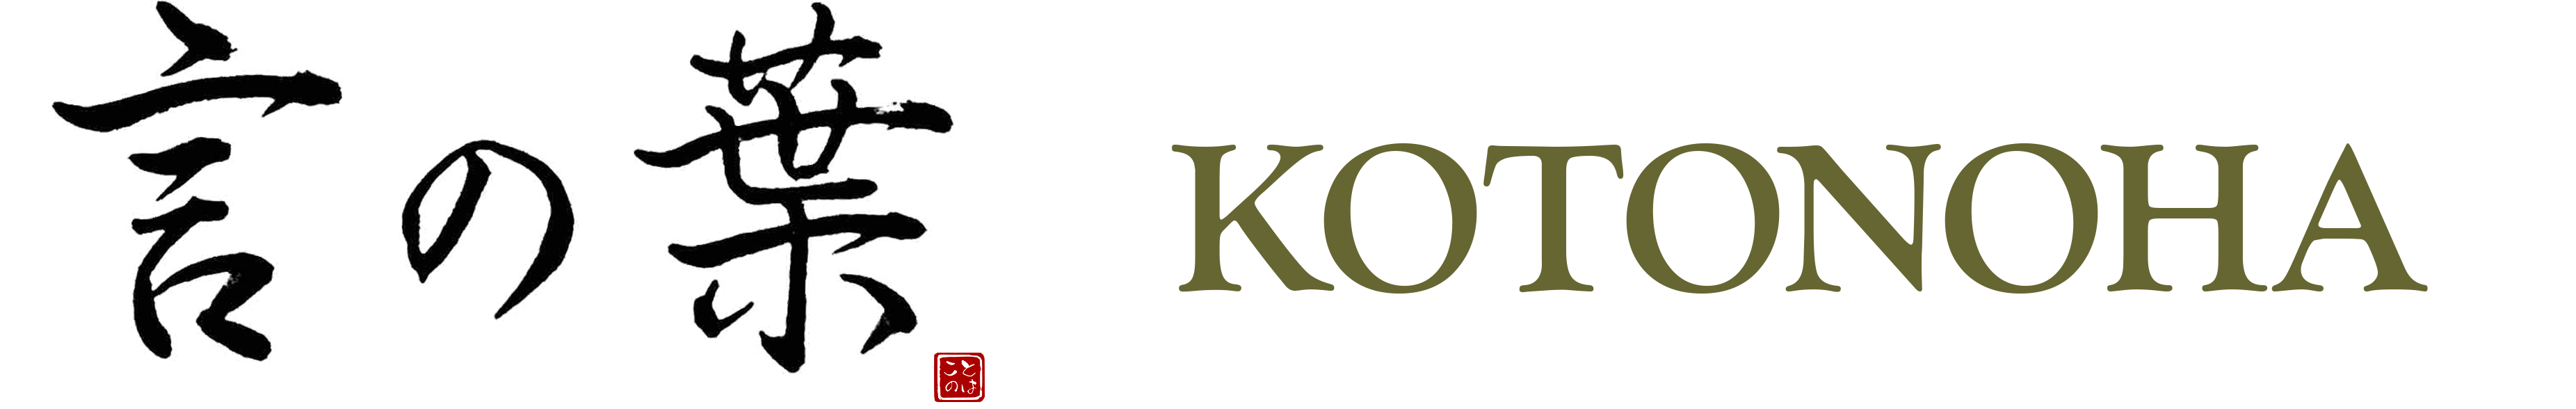 logo_kotonoha.png